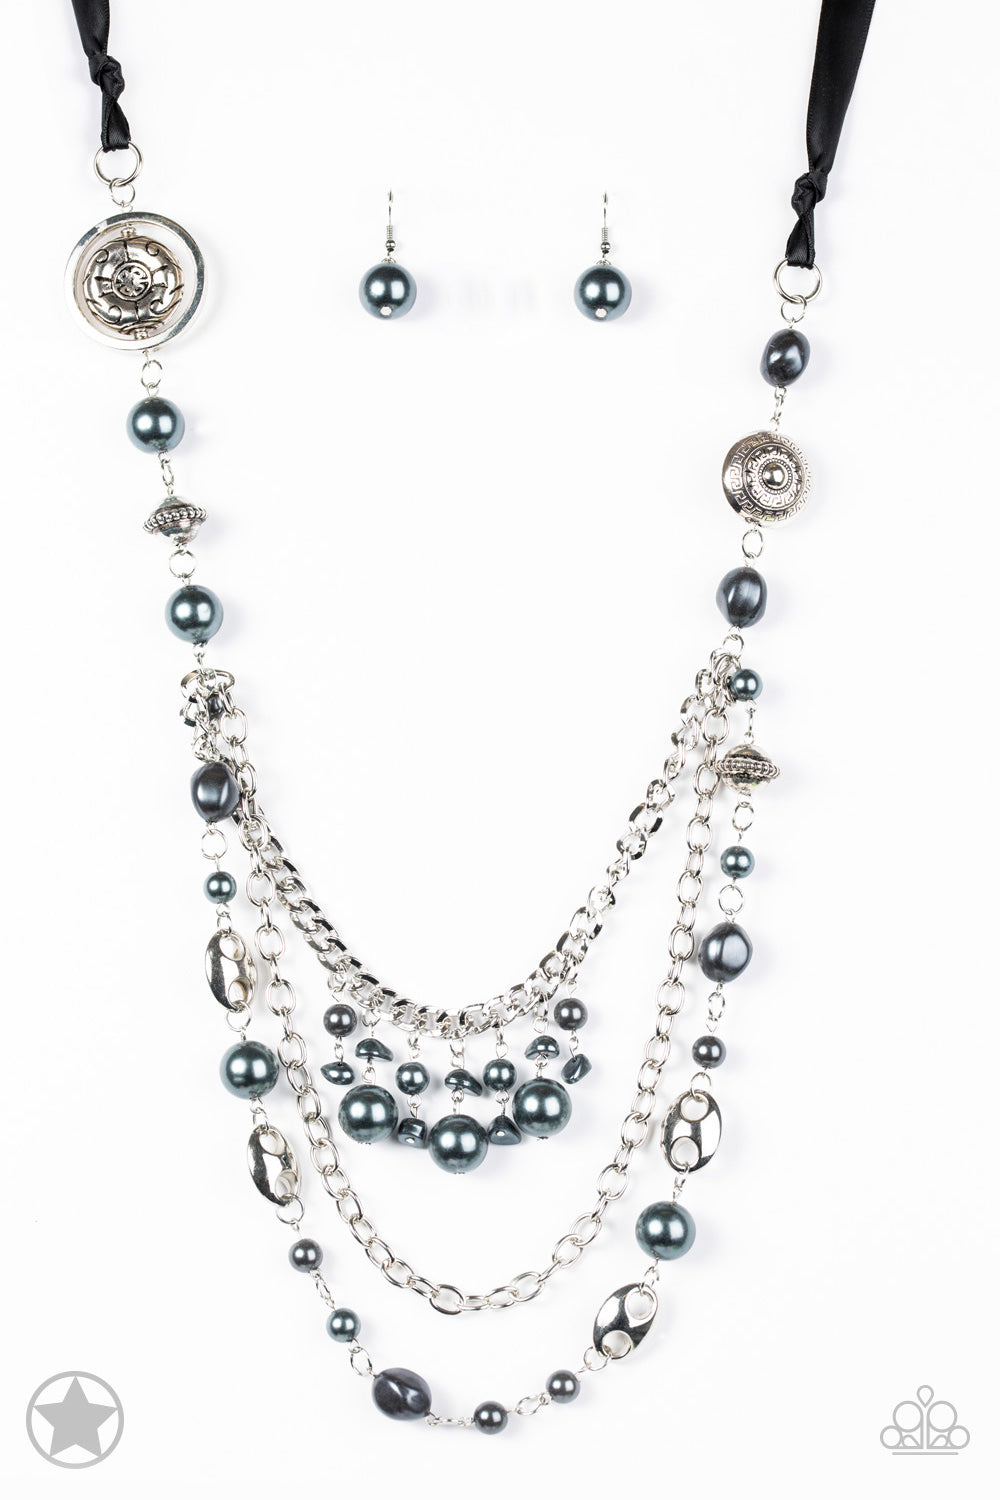 pittmanbling-and-jewelry-inc-presentsblack-ribbon-and-dark-gray-pearls-blockbuster-paparazzi-accessories